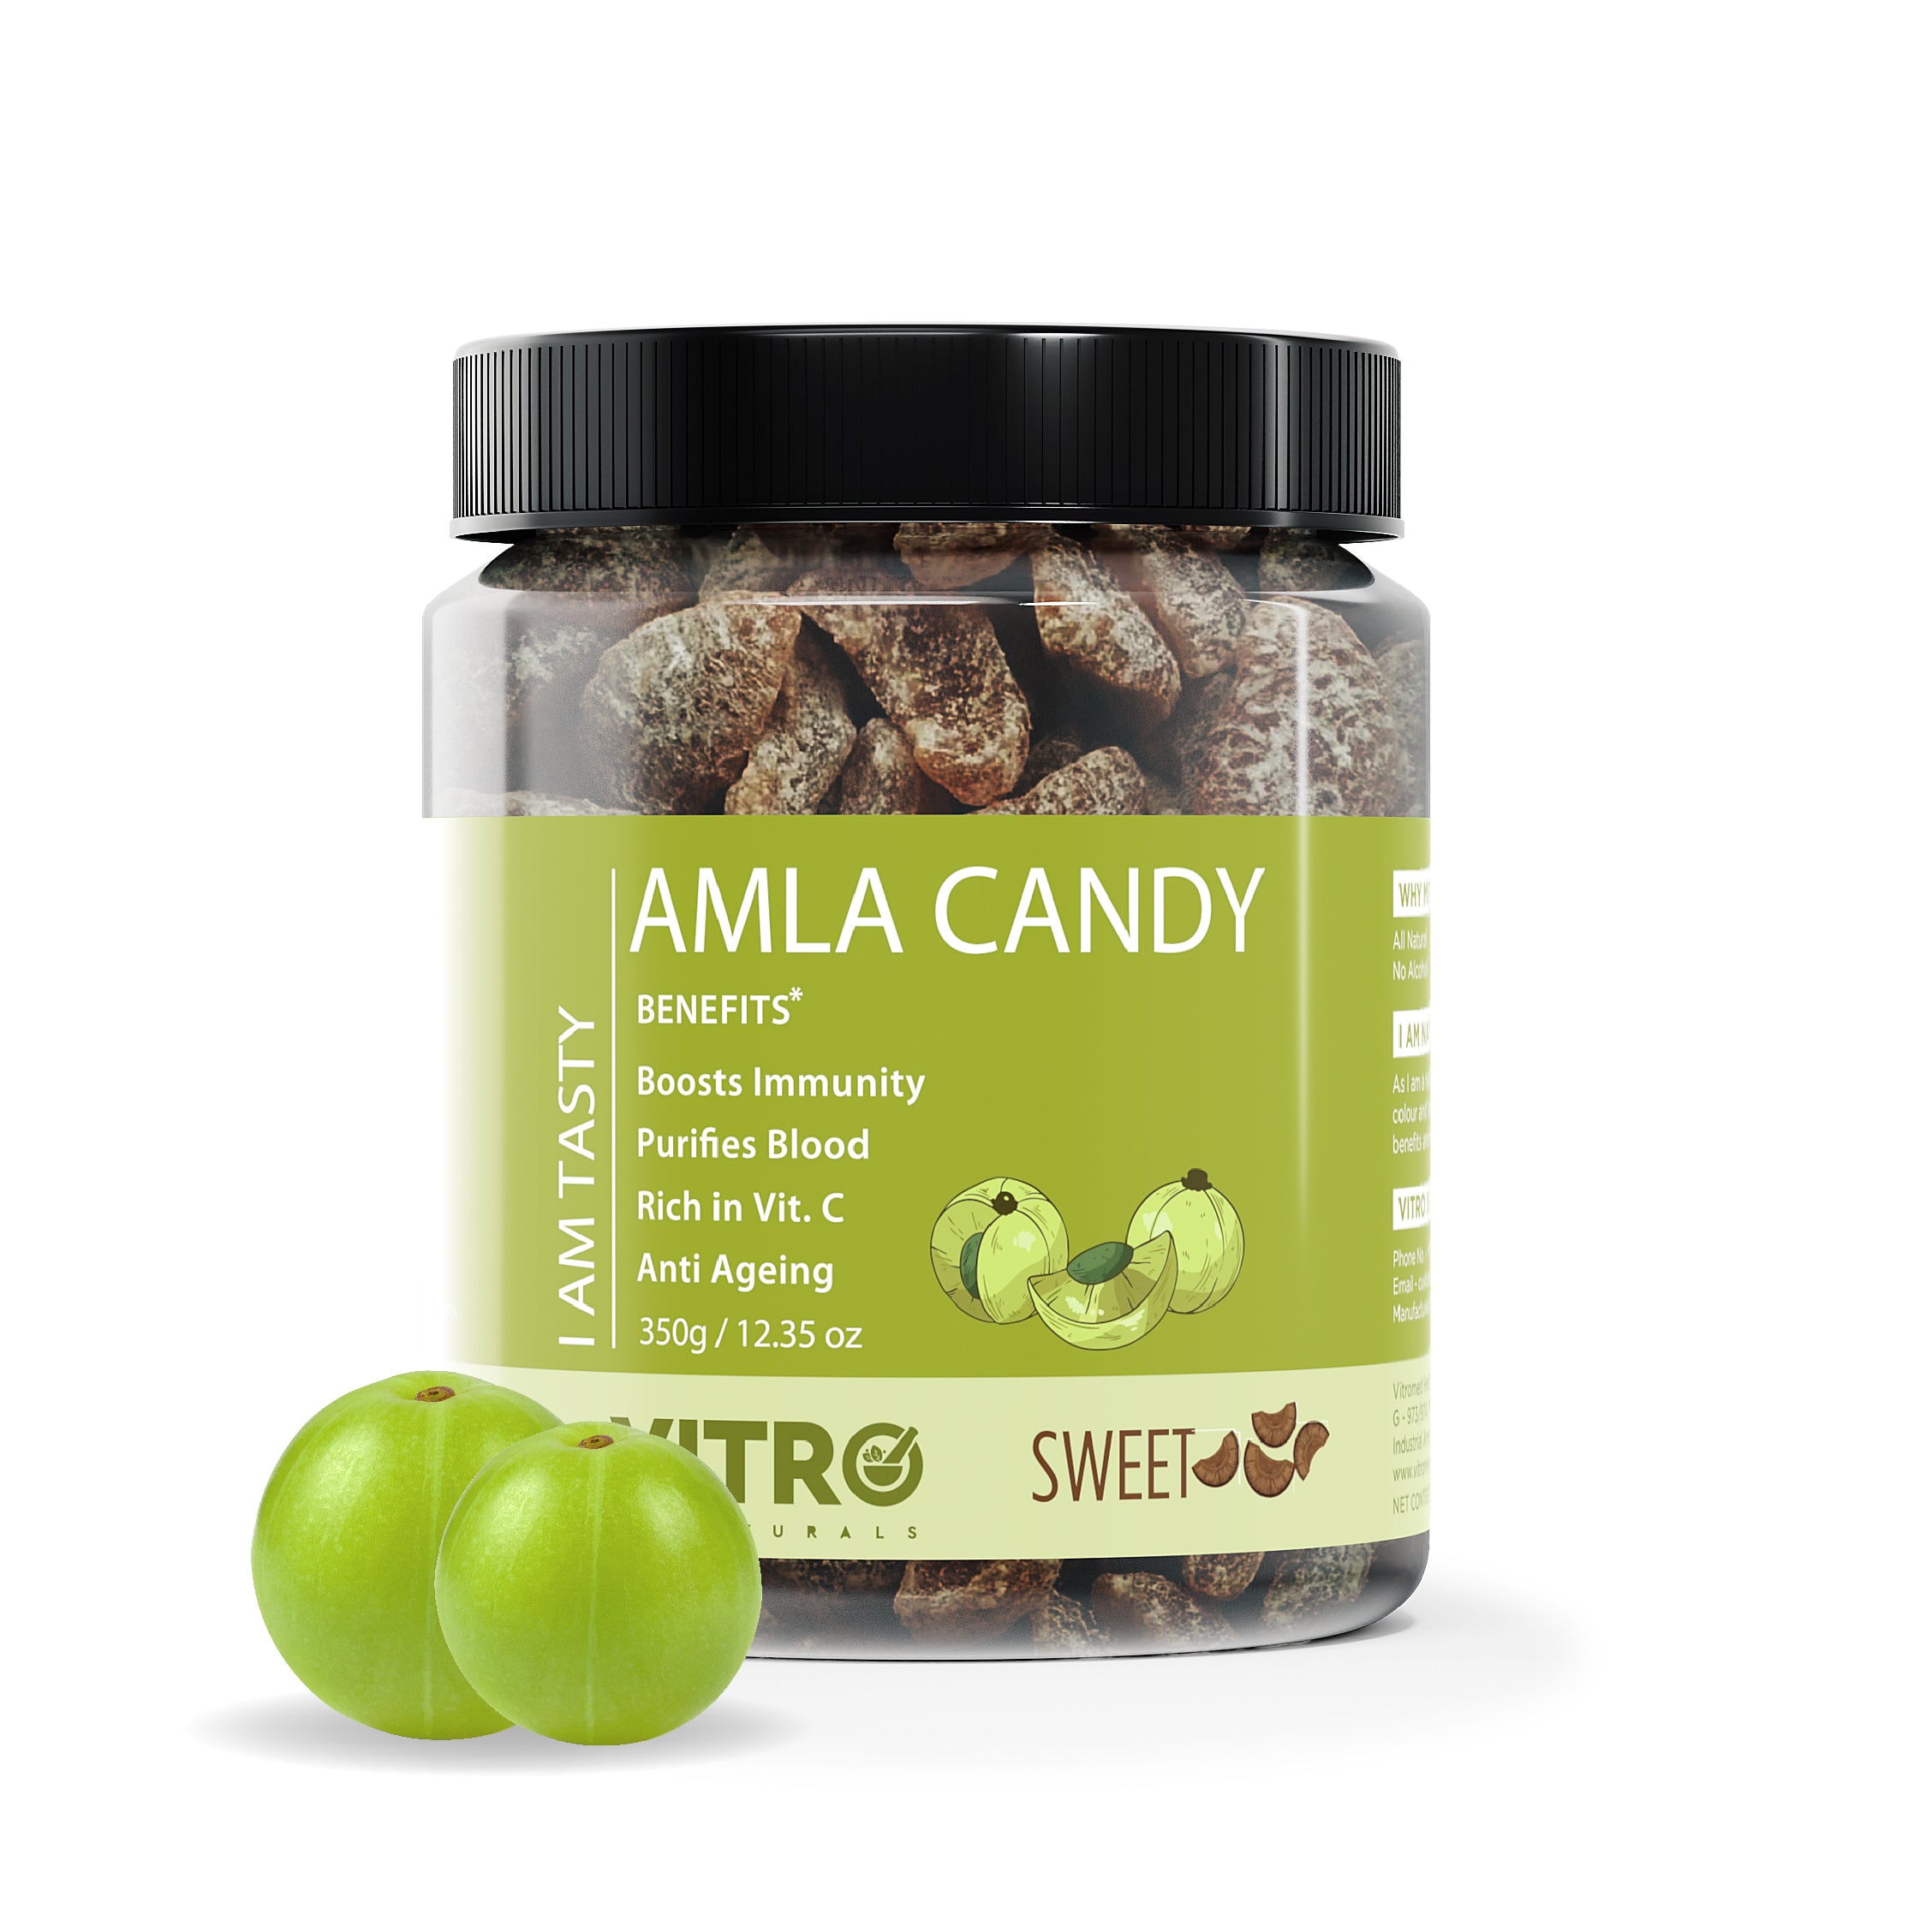 VITRO Amla Candy Sweet, Dry & Soft Candy 350gm